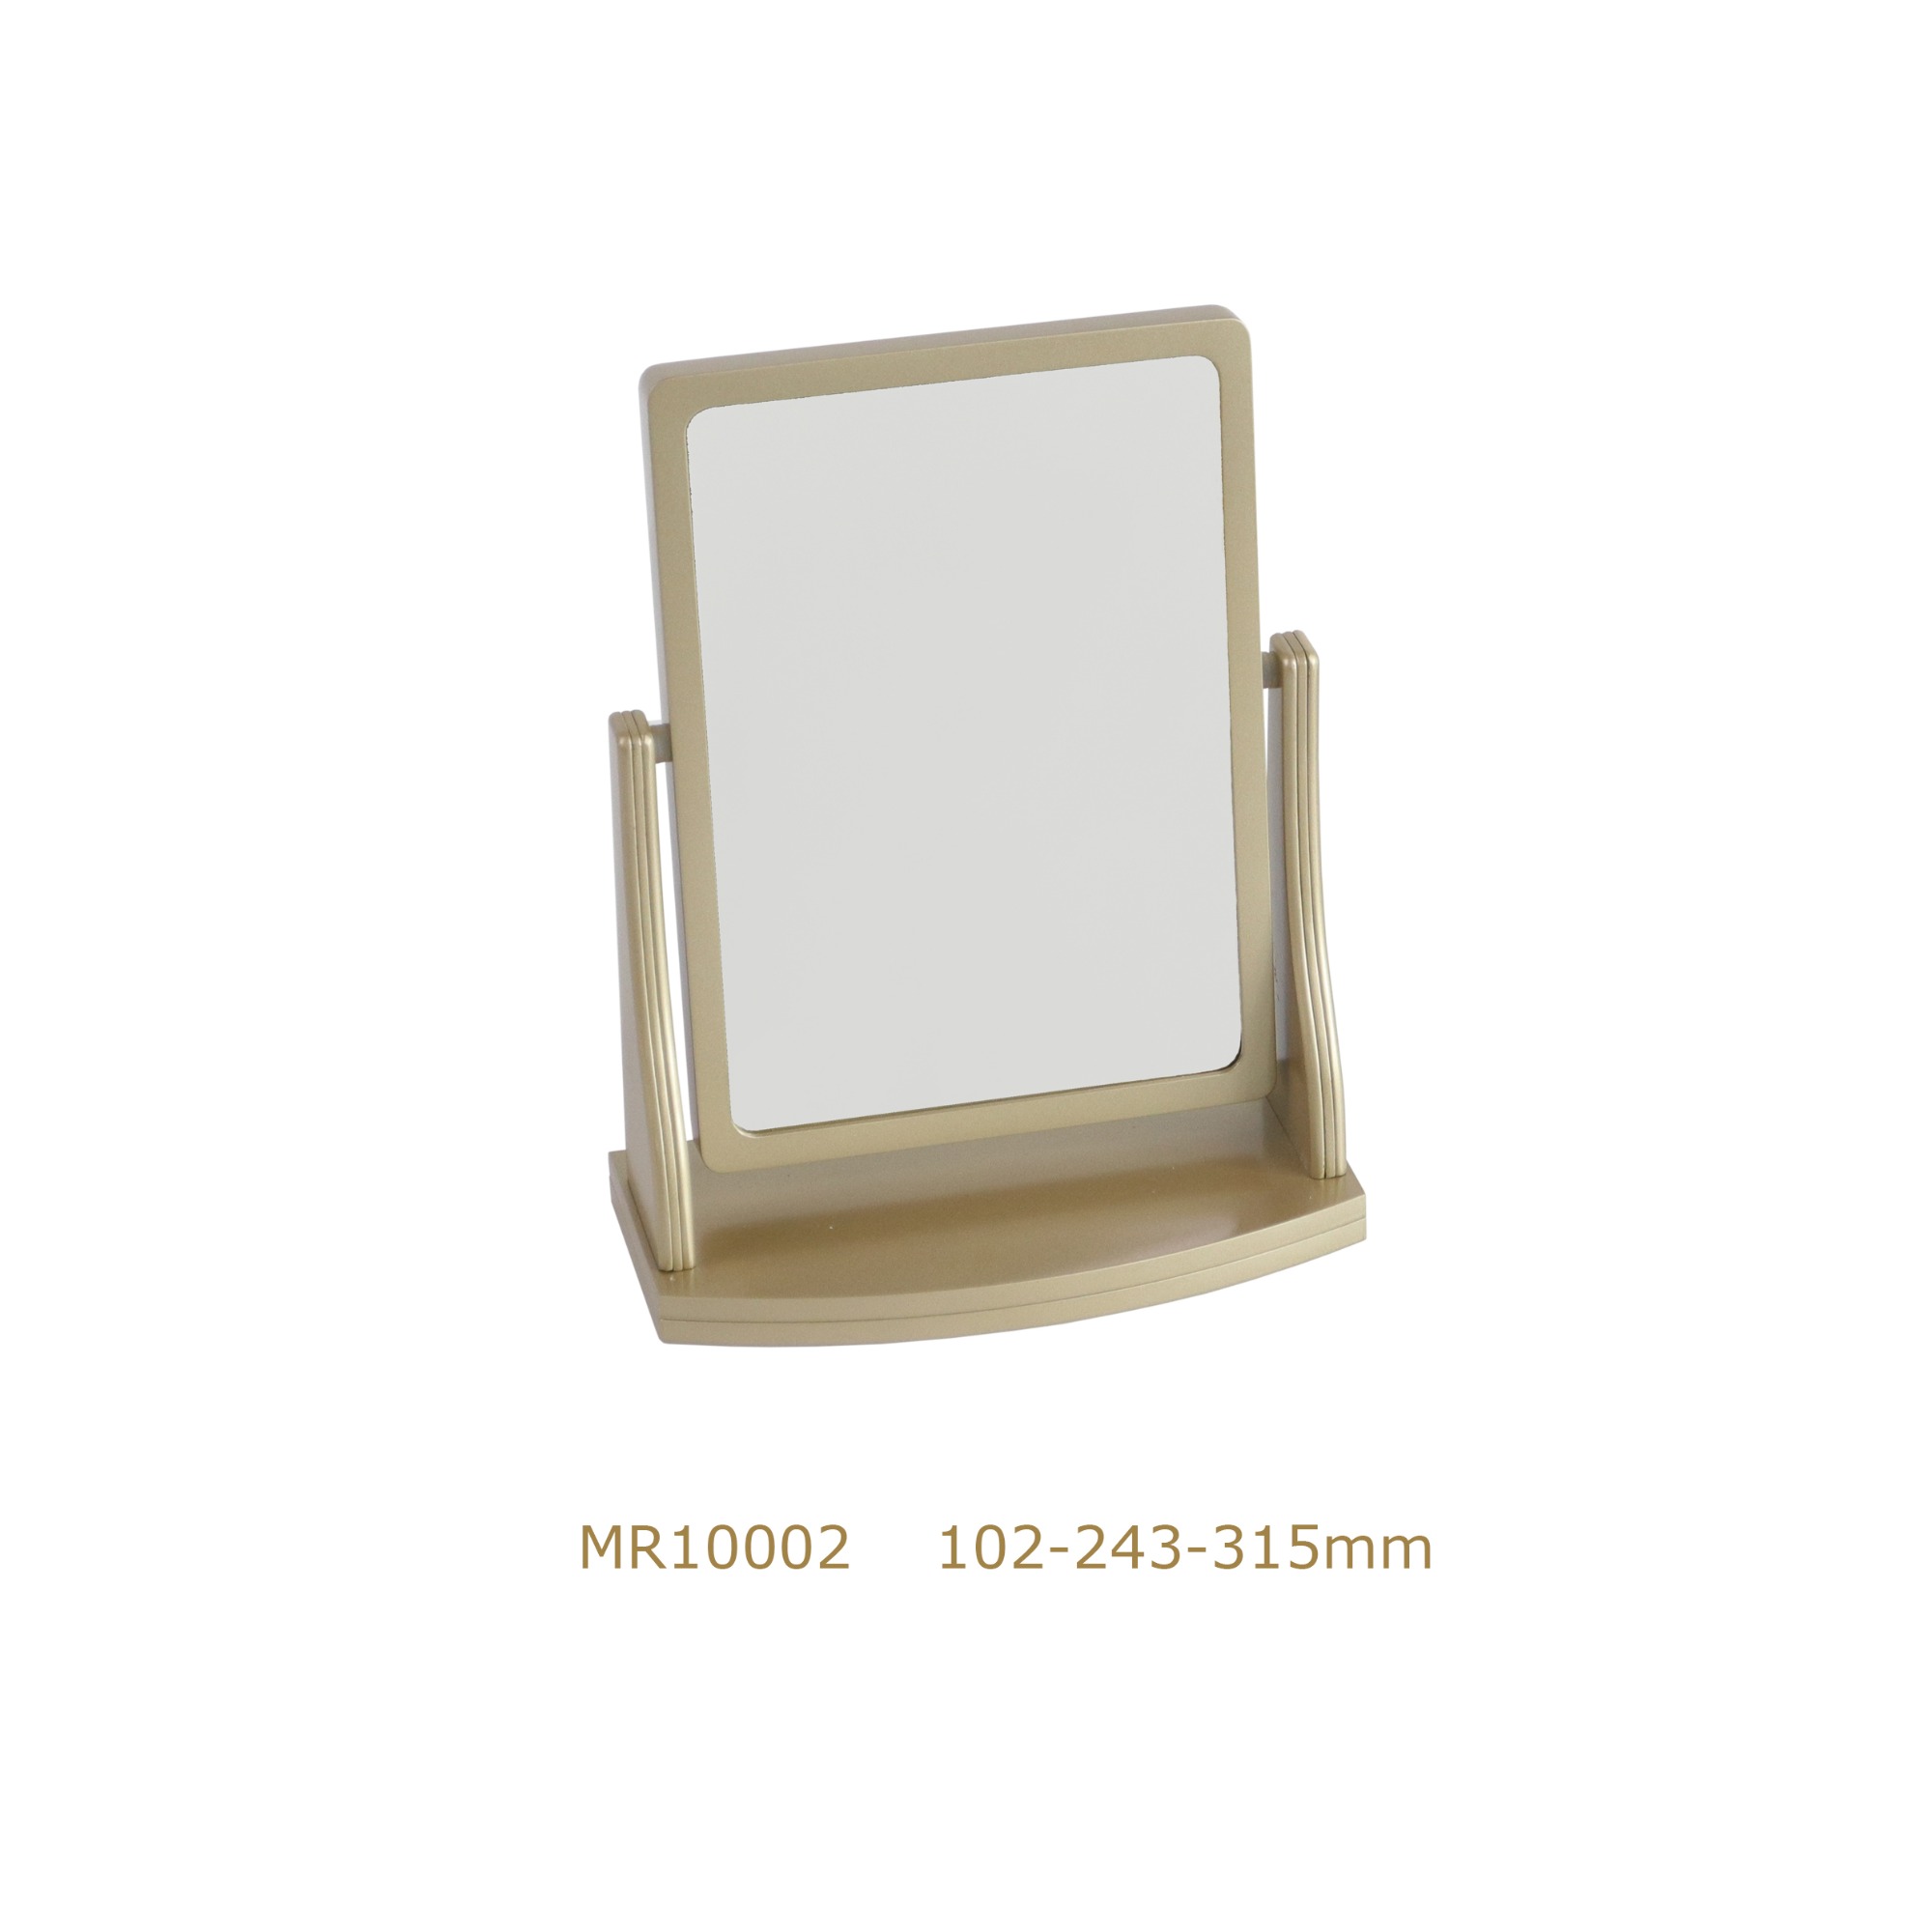 MR10002 High Quality Elegant Jewelry Display Mirror